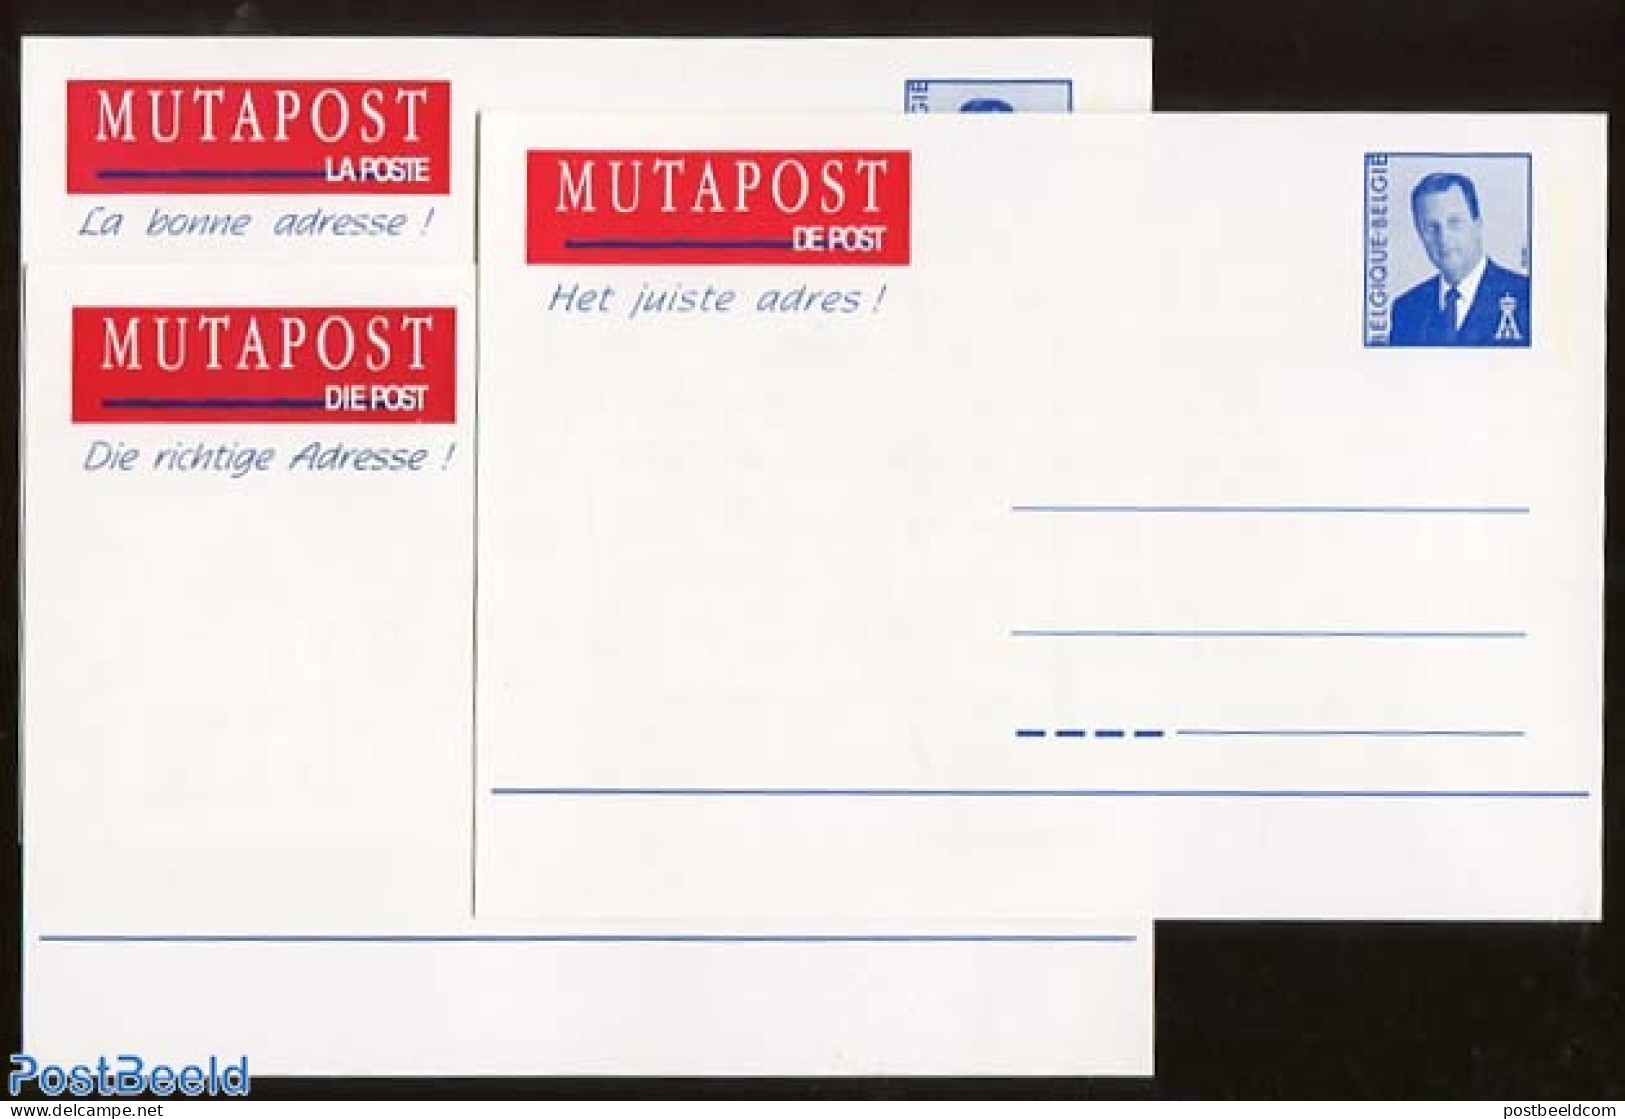 Belgium 1996 Address Change Card Set (3 Cards), Unused Postal Stationary - Lettres & Documents